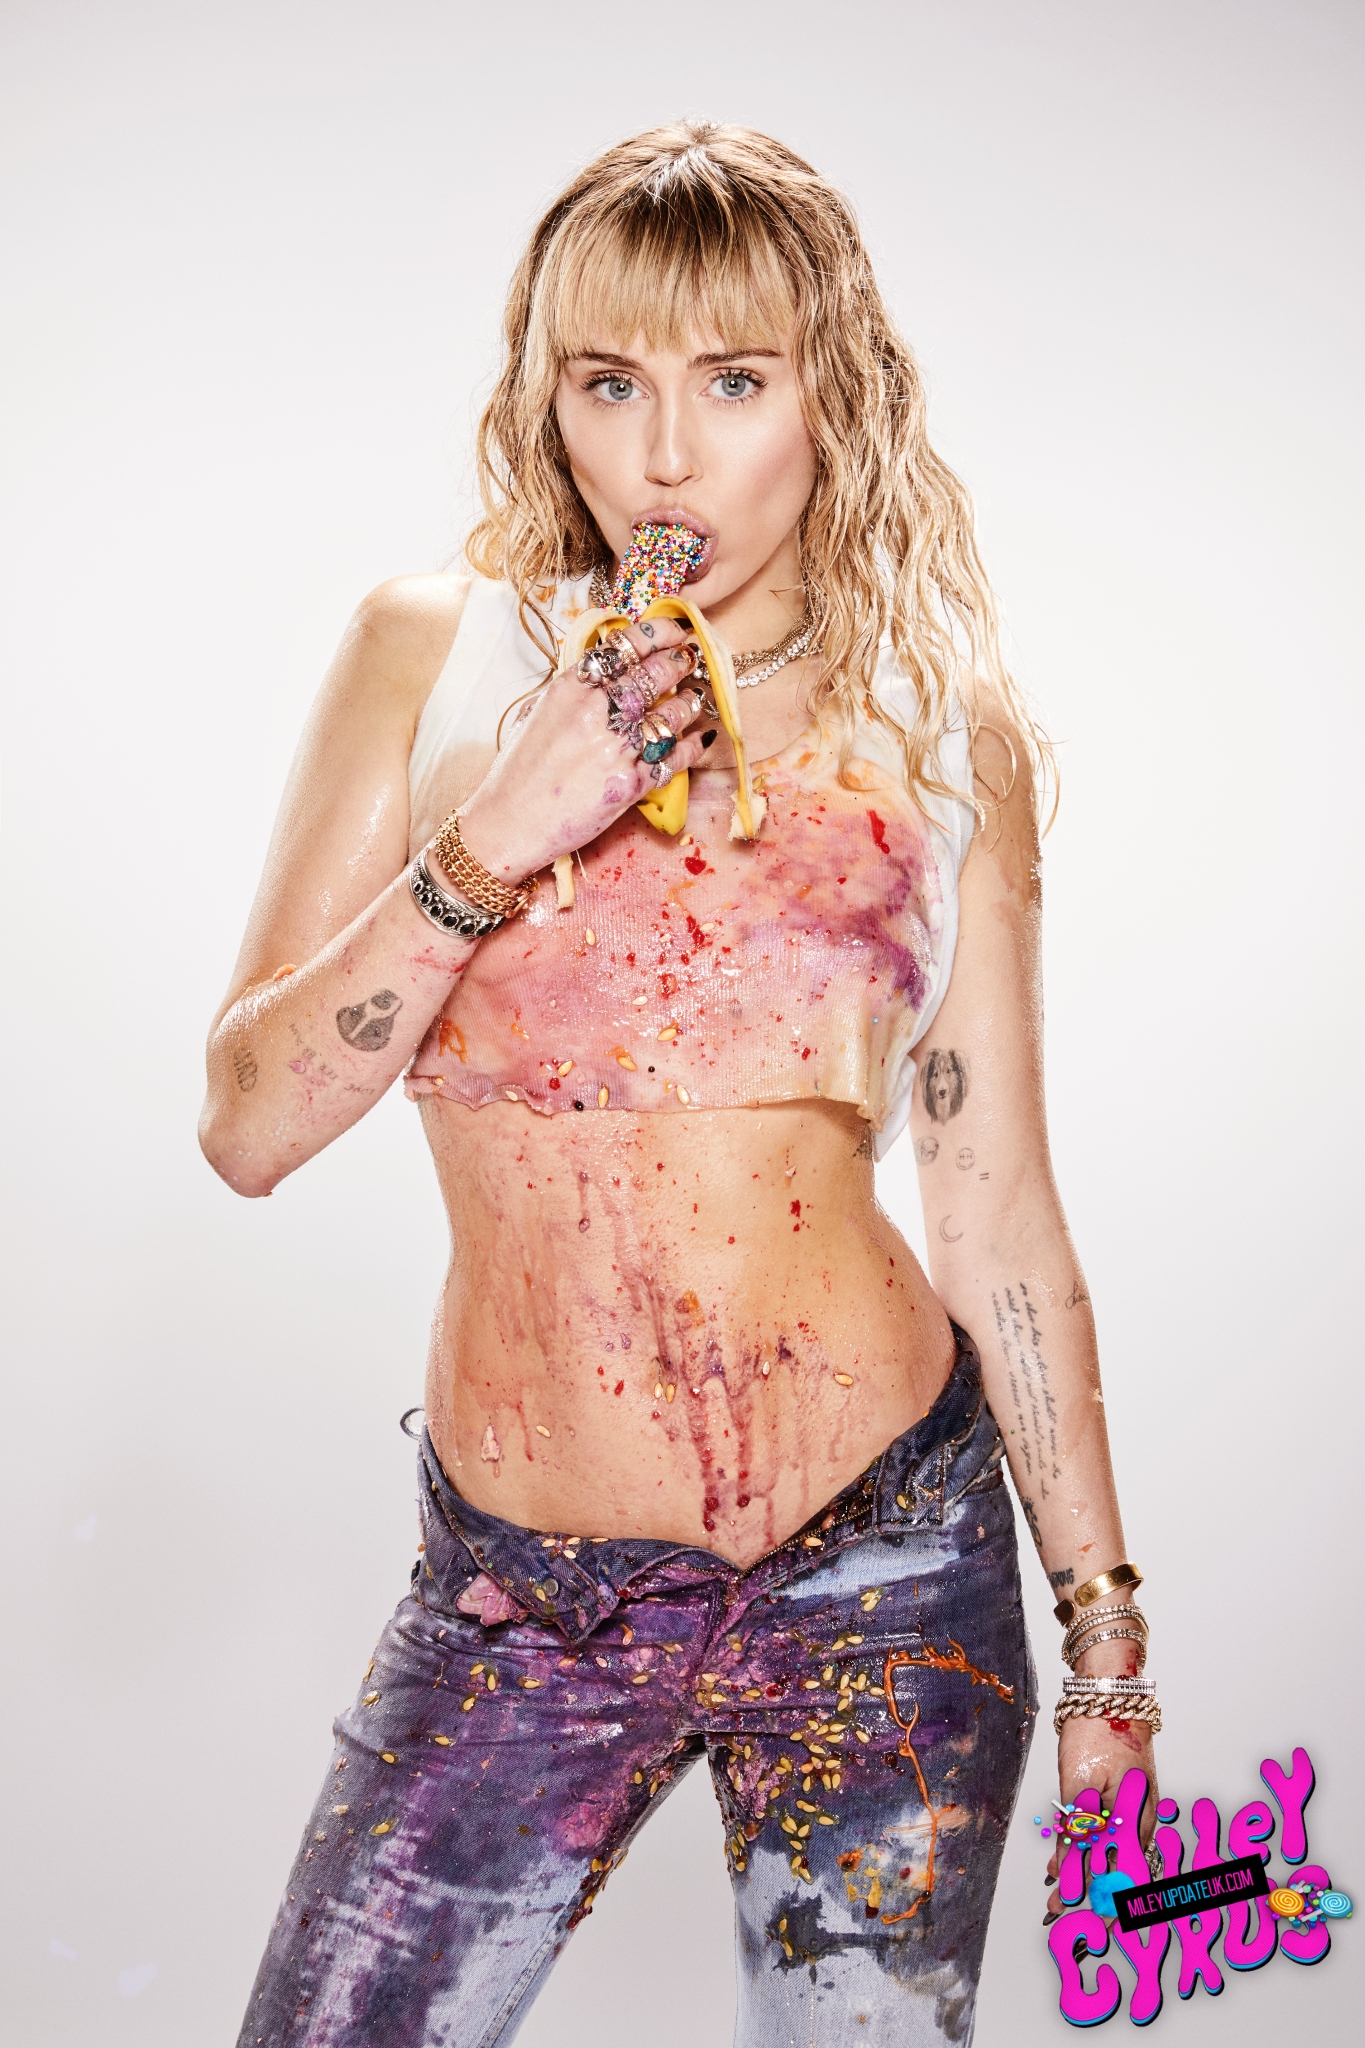 Miley Cyrus Instagram. 